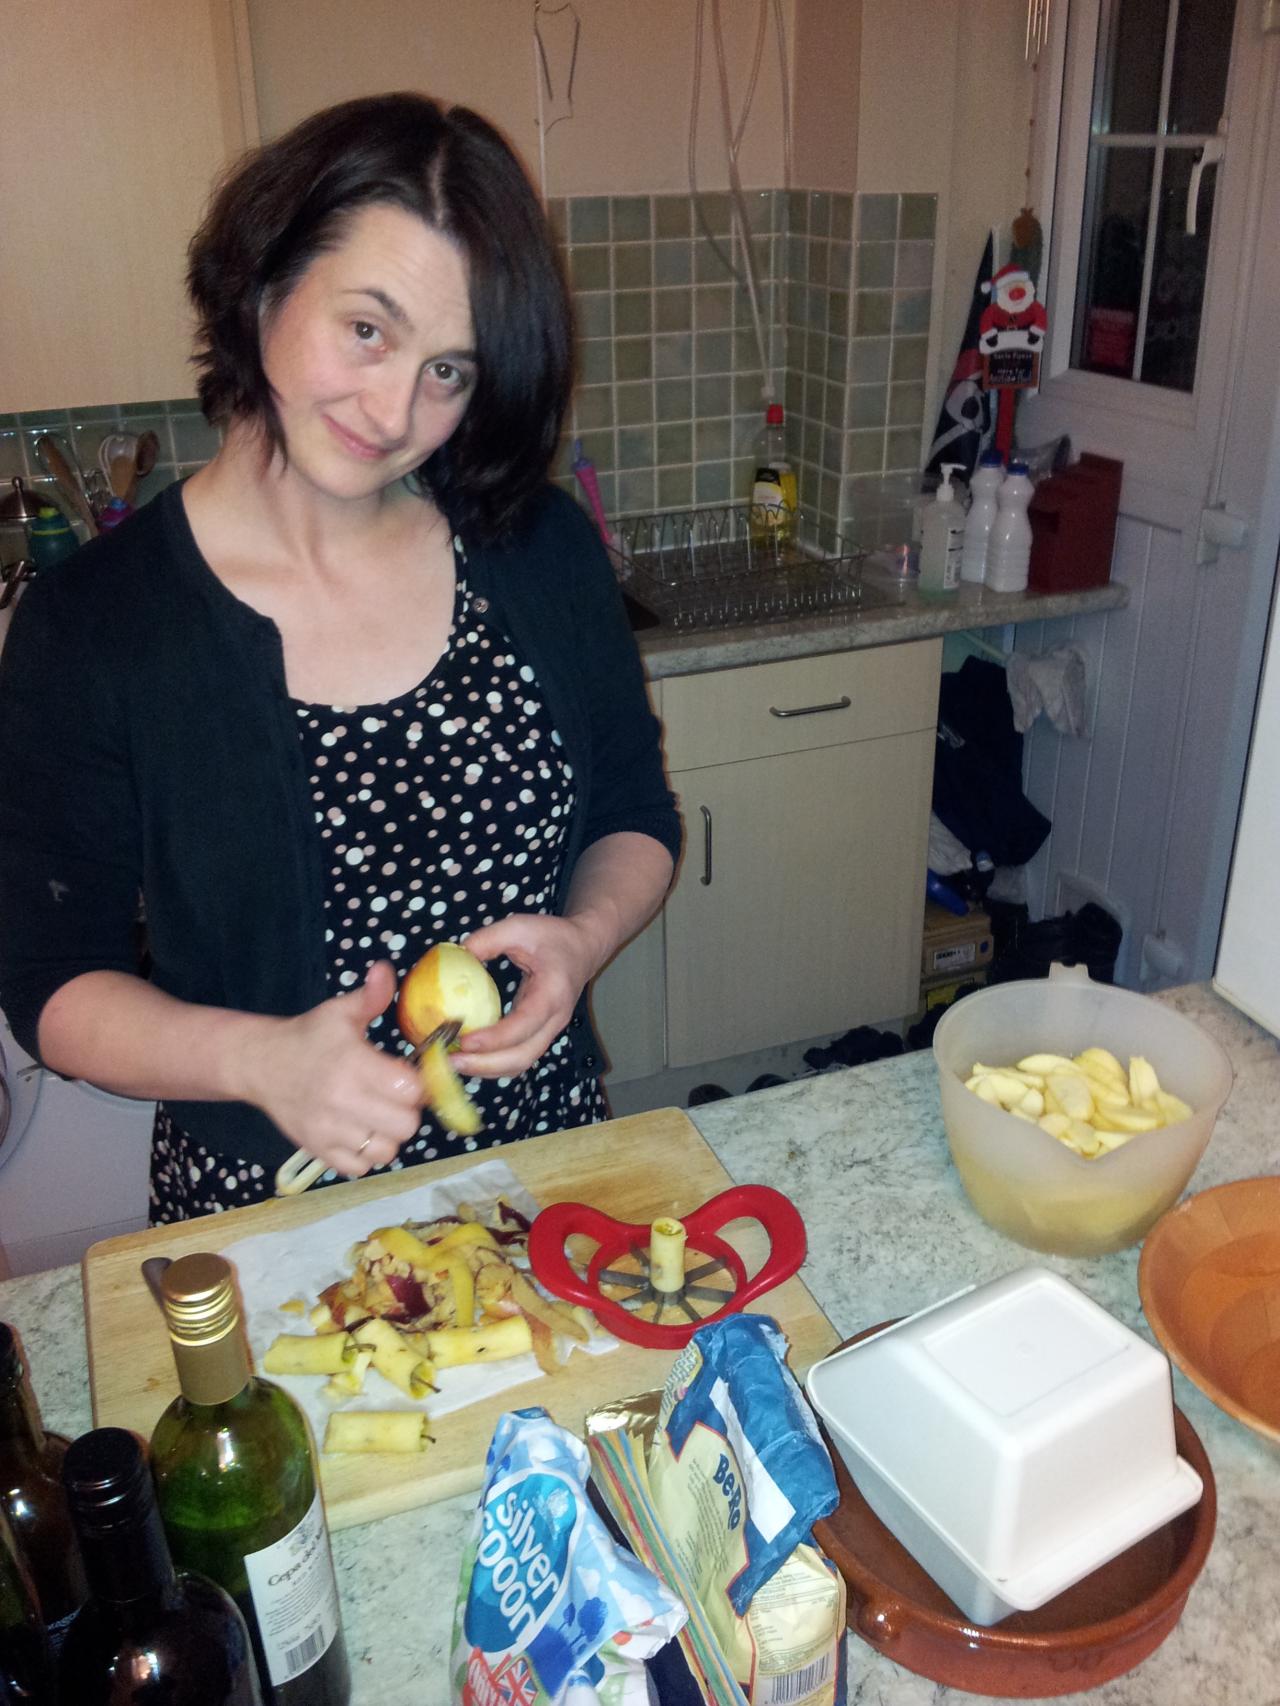 Jane making apple crumble.